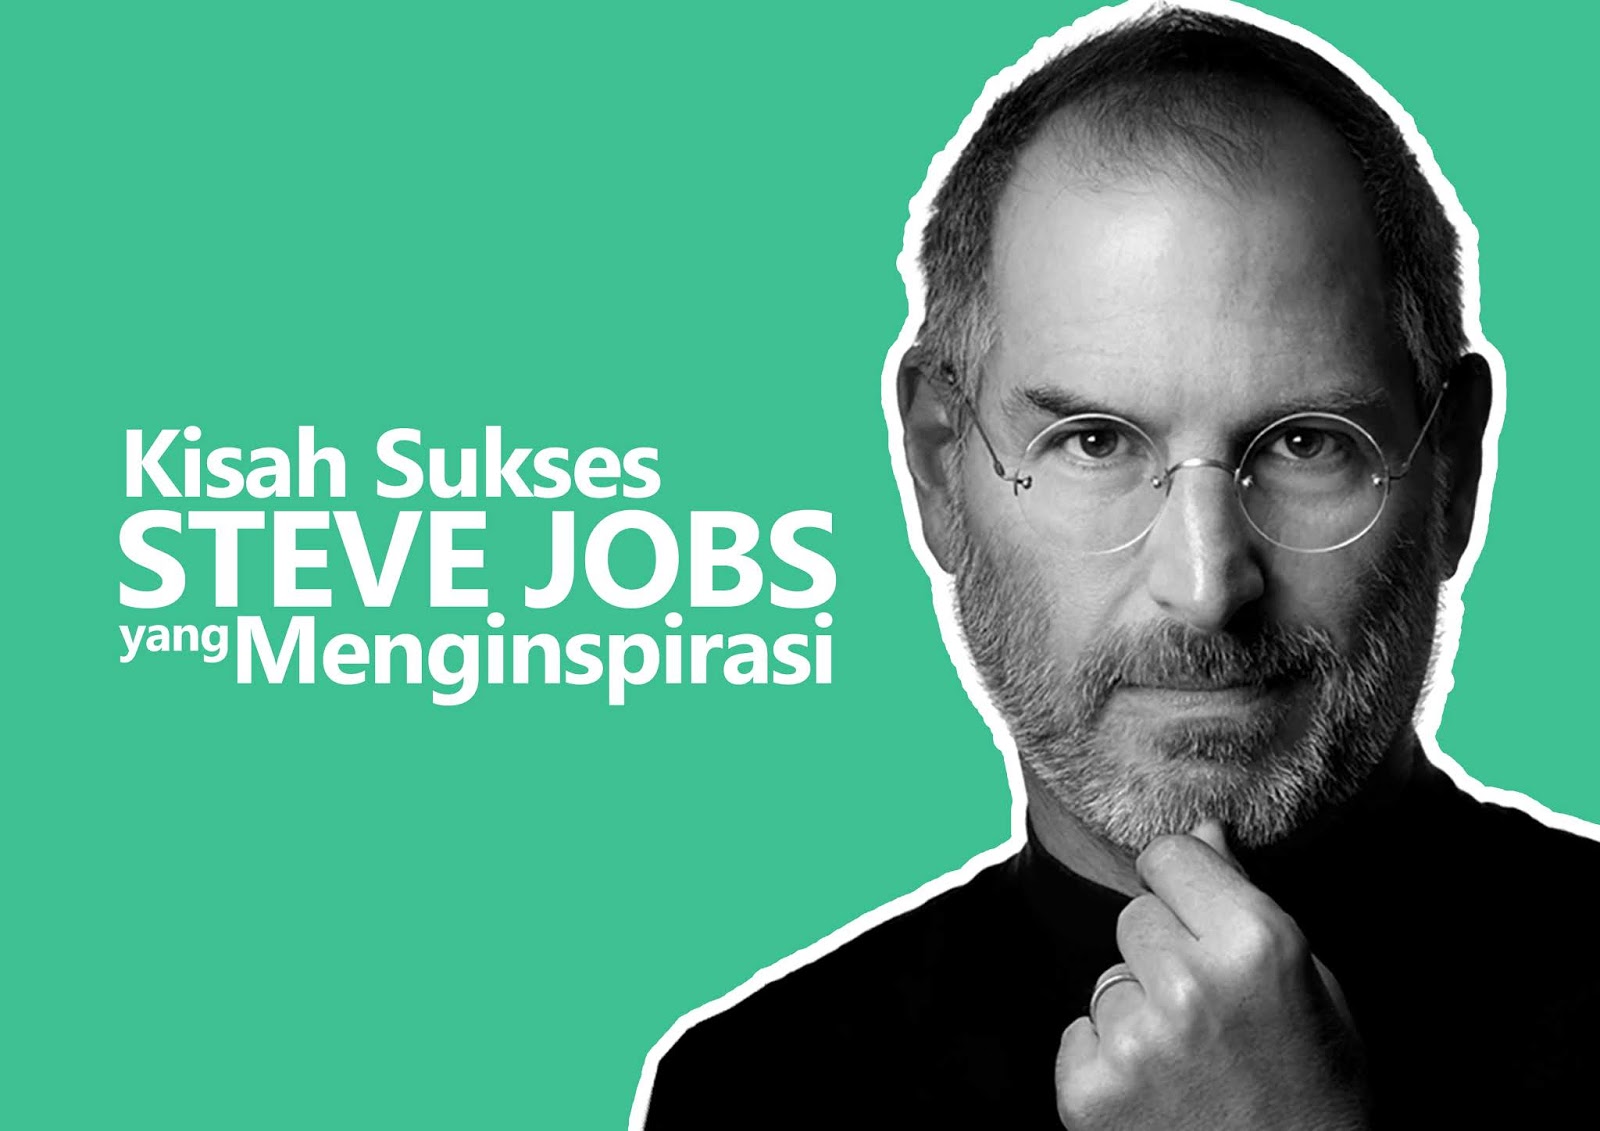 Inilah Kisah Sukses Steve Jobs Sang Pendiri Apple Yang